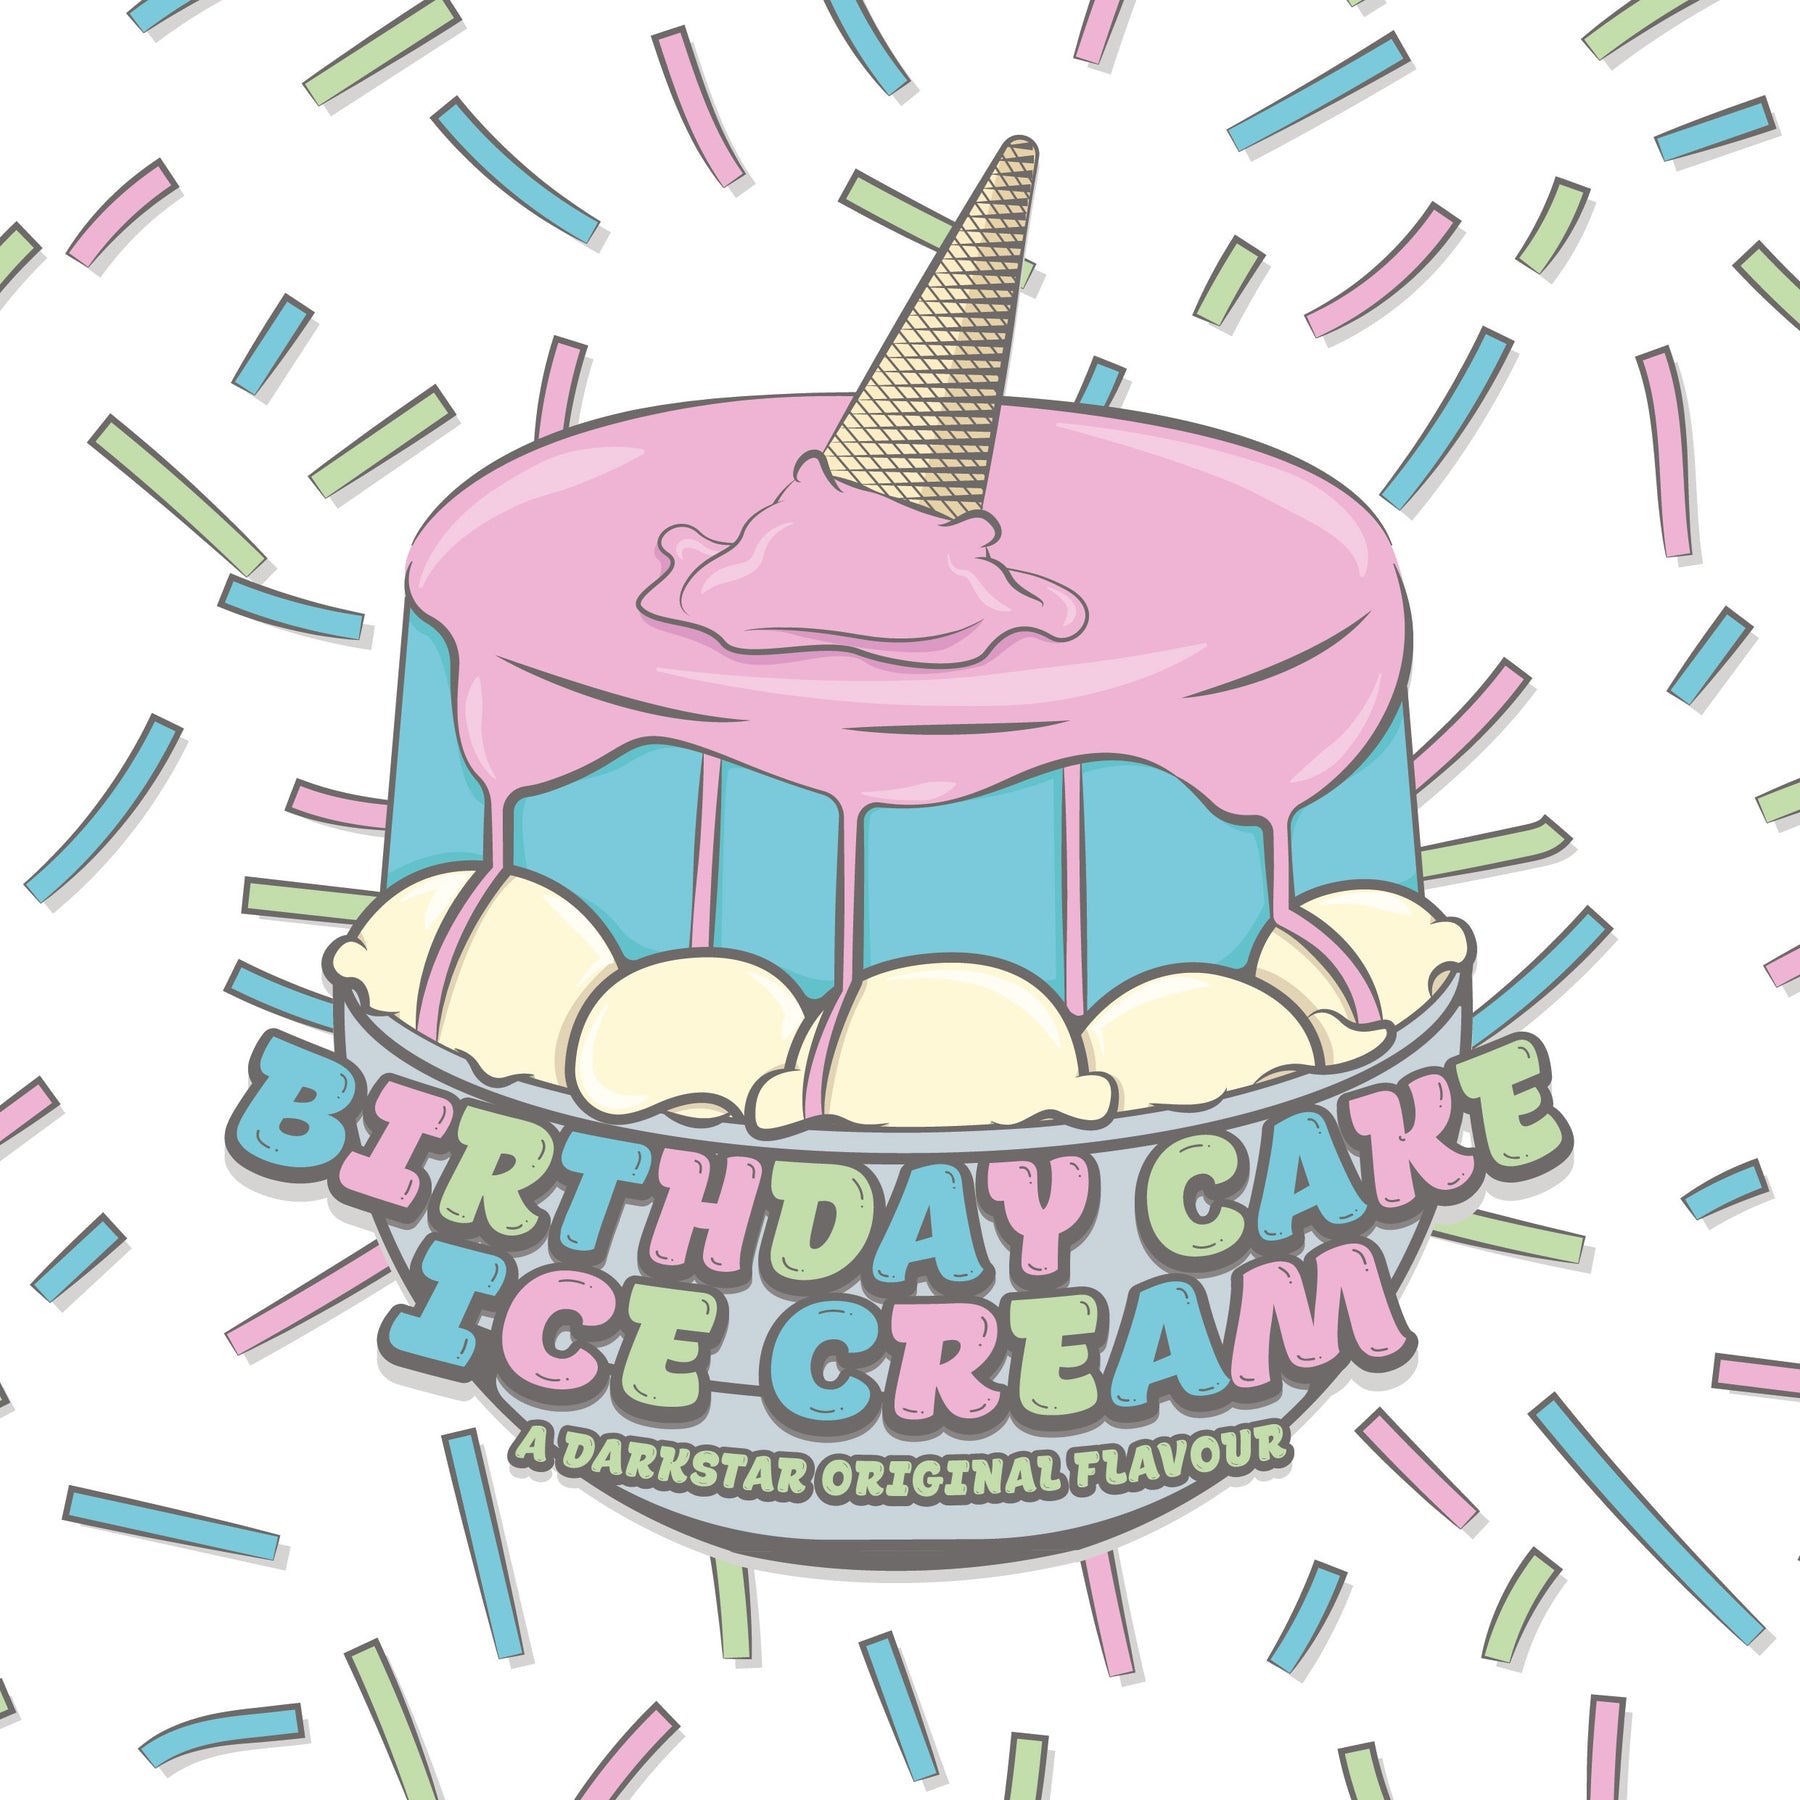 Birthday Cake Ice Cream – Now An Open Recipe!